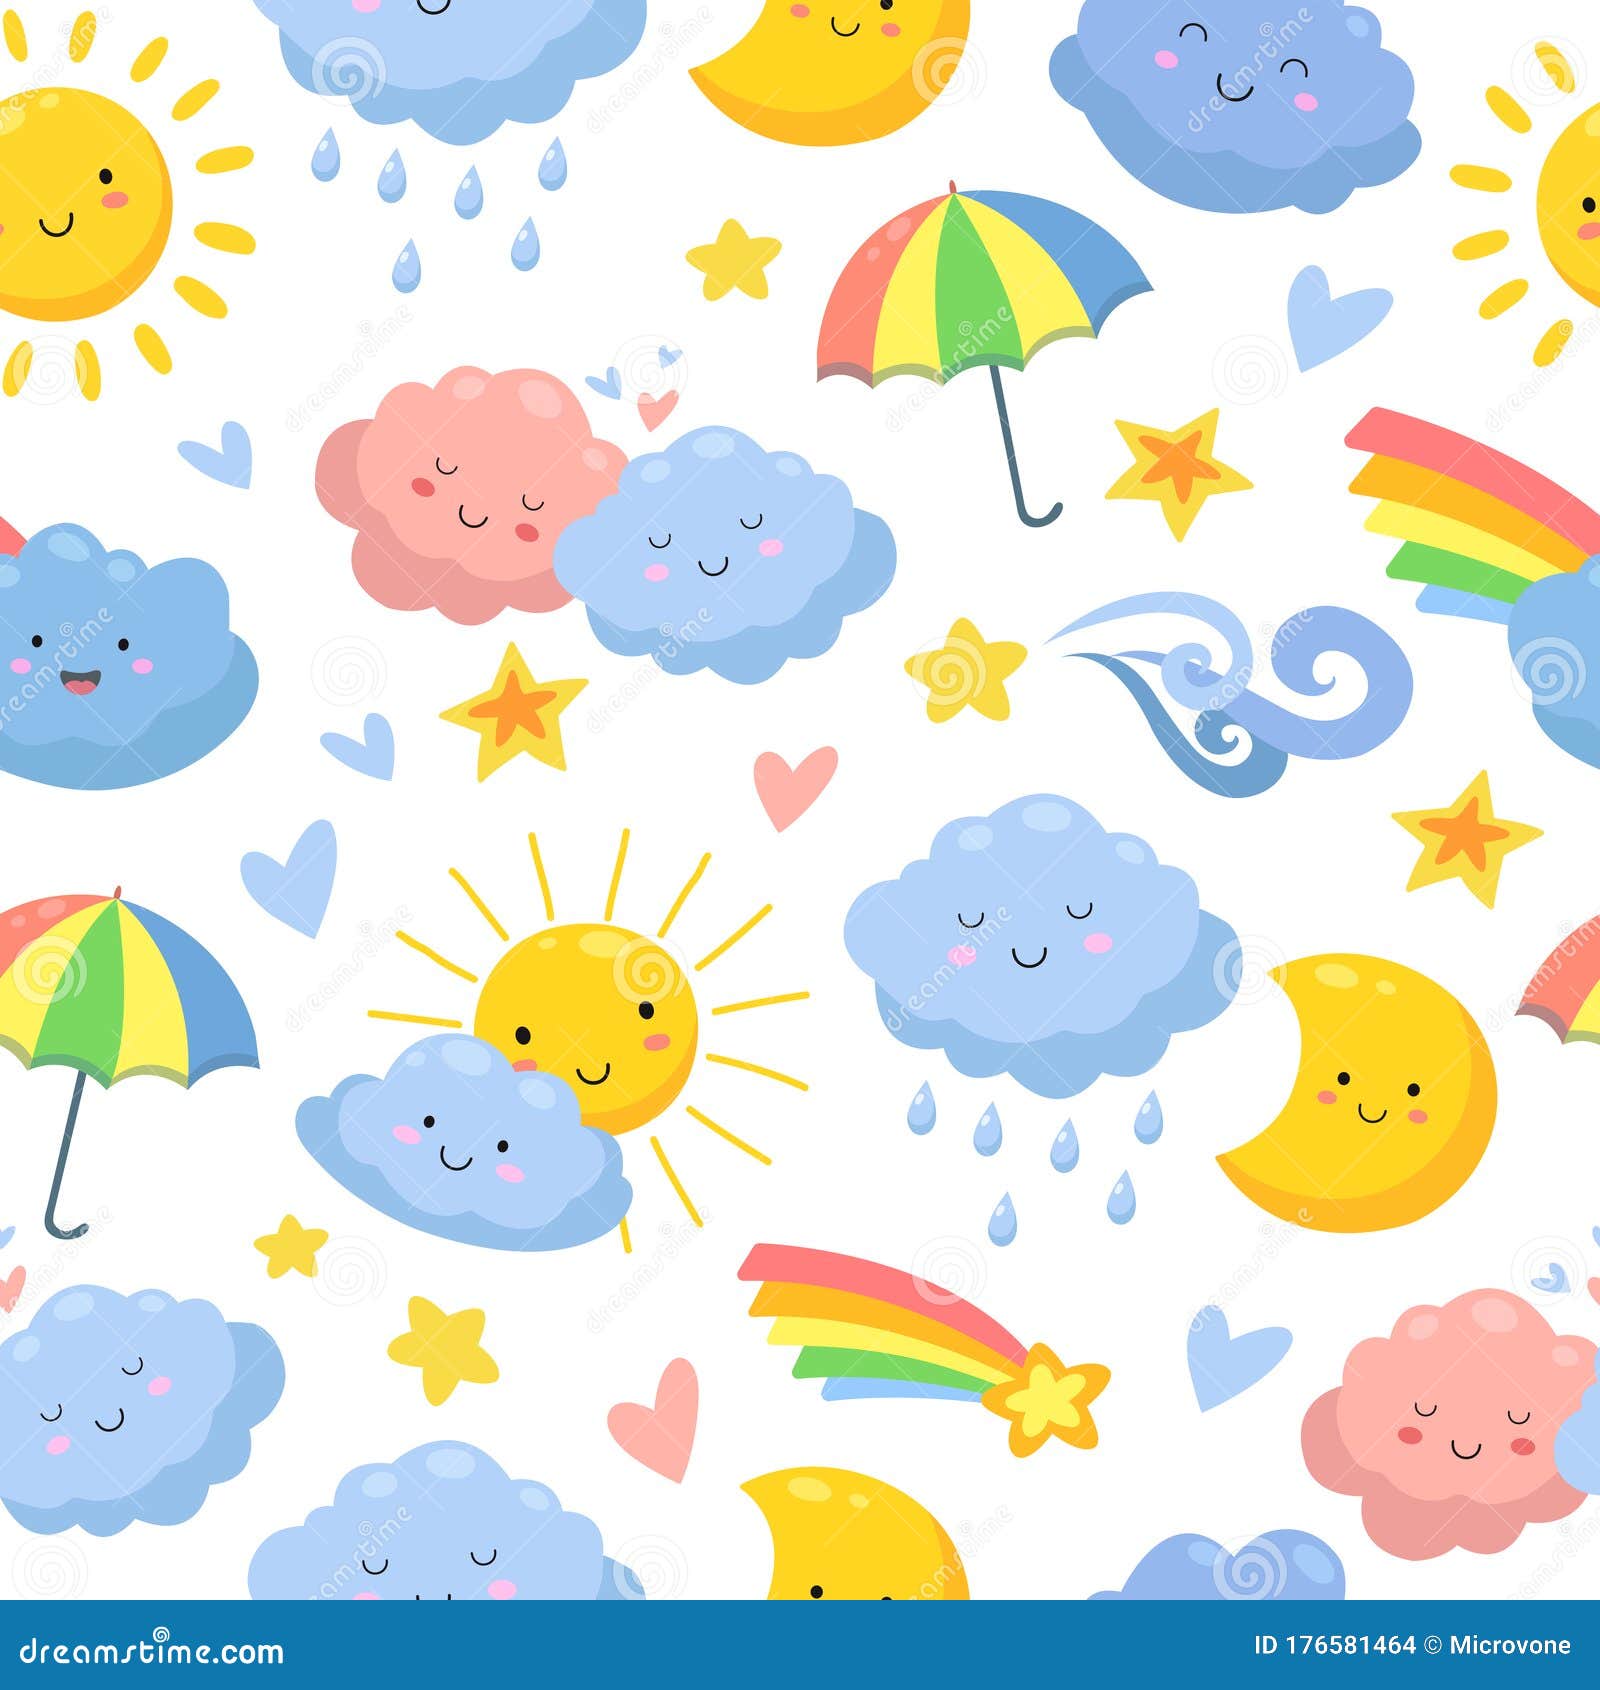 Cute Wallpaper Day Night Sky Cloud Stock Illustration 1286683447   Shutterstock